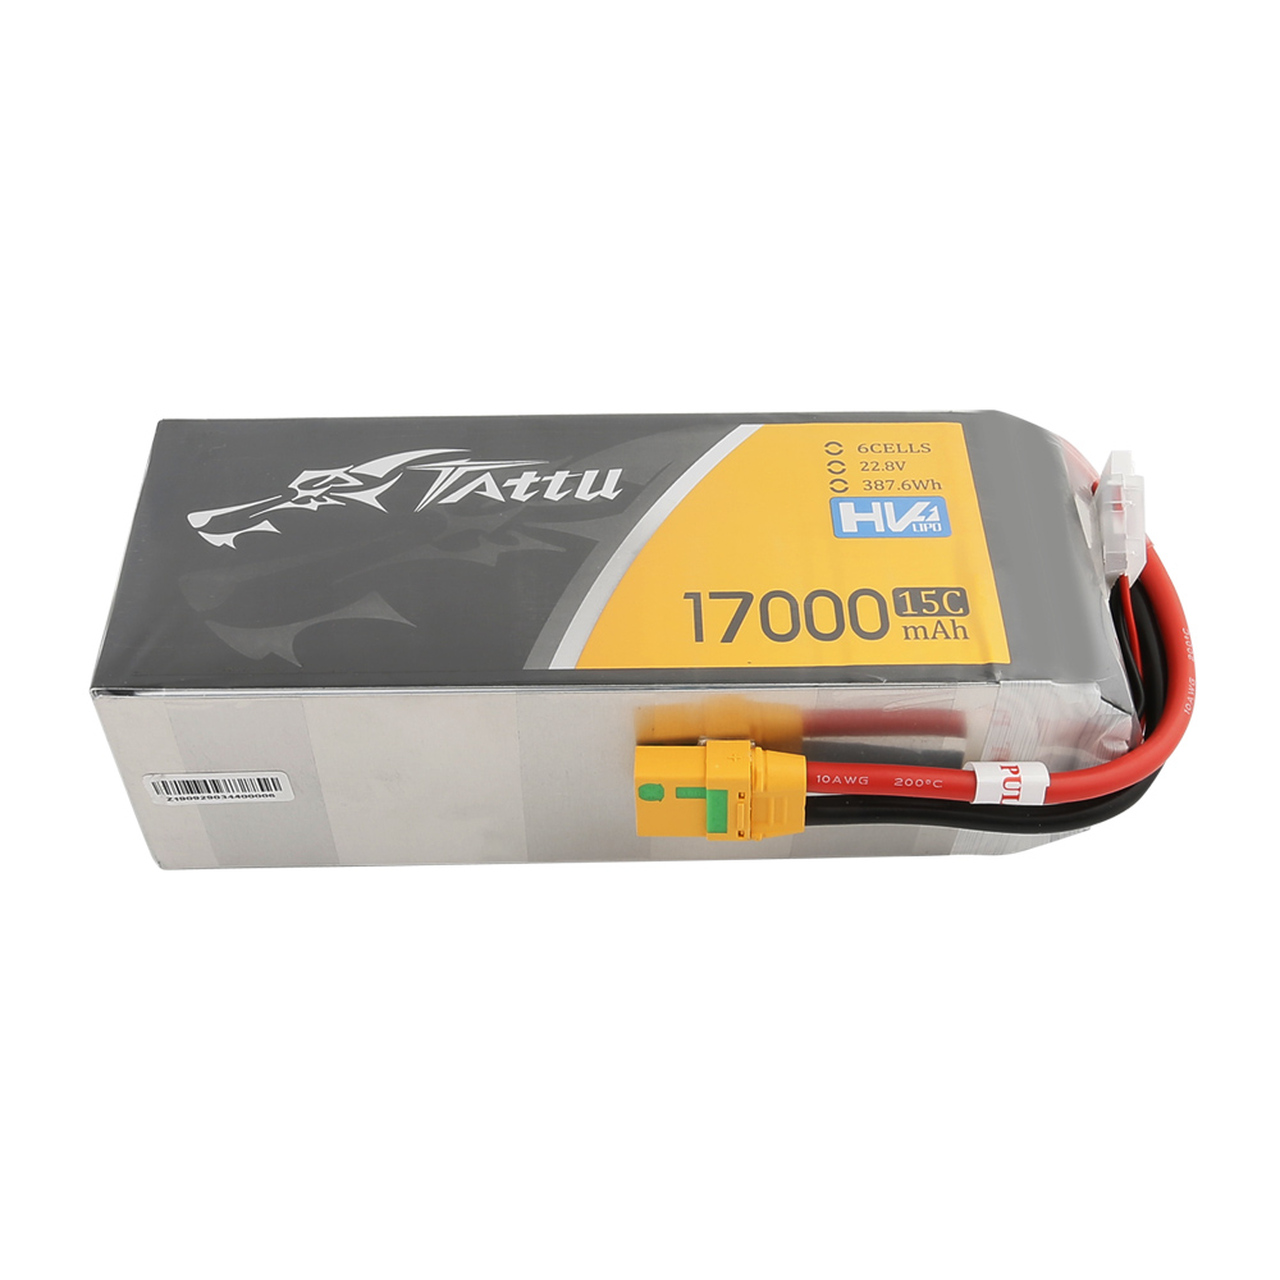 Tattu 22.8V 15C 6S 17000mAh LiPo Battery with XT90-S Plug for UAV